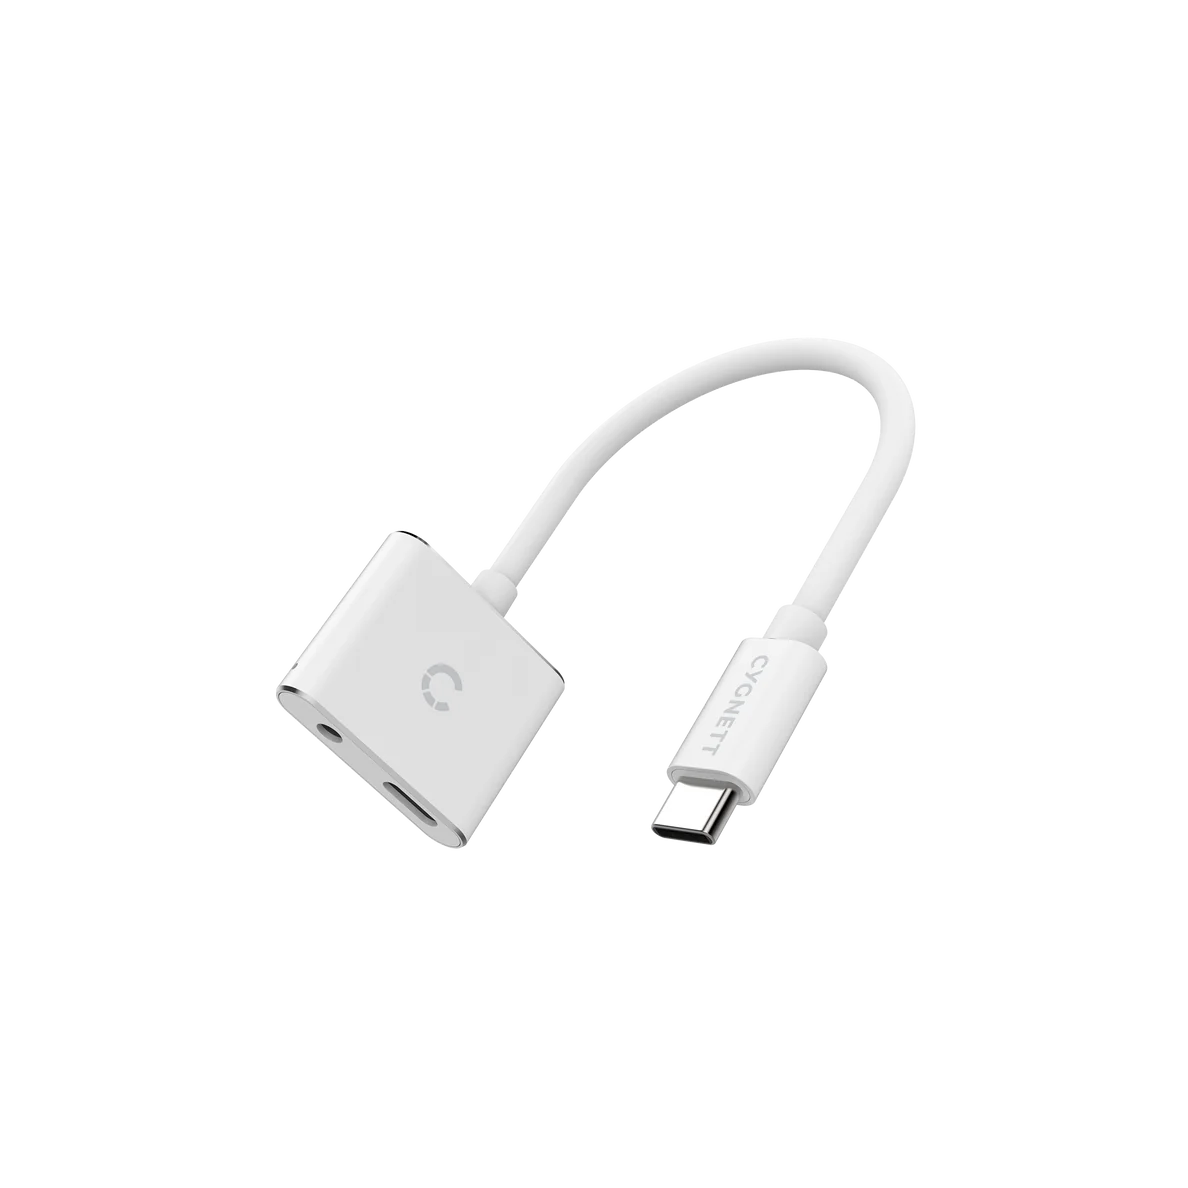 Cygnett USB-C Audio + PD Charge Adapter